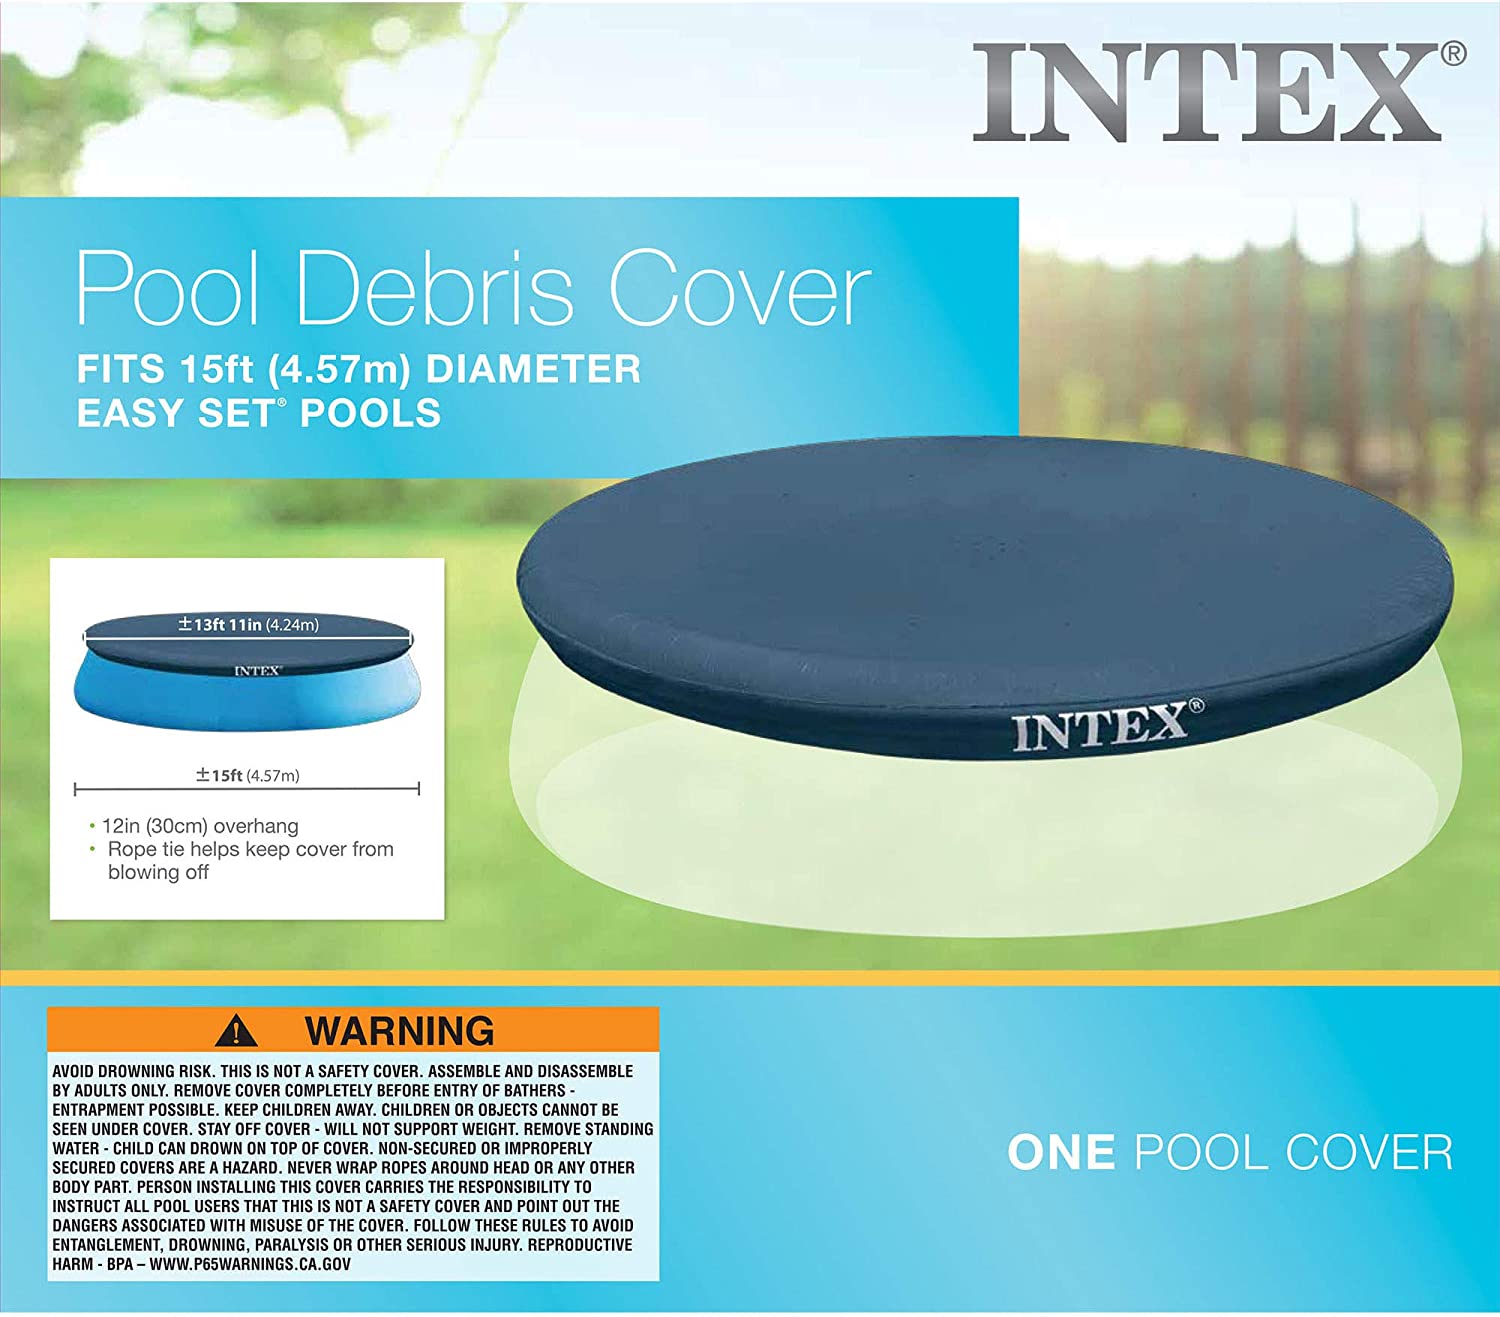 Intex Recreation 28023E N/AA Intex 15-Foot Round Easy Set Pool Cover, Blue